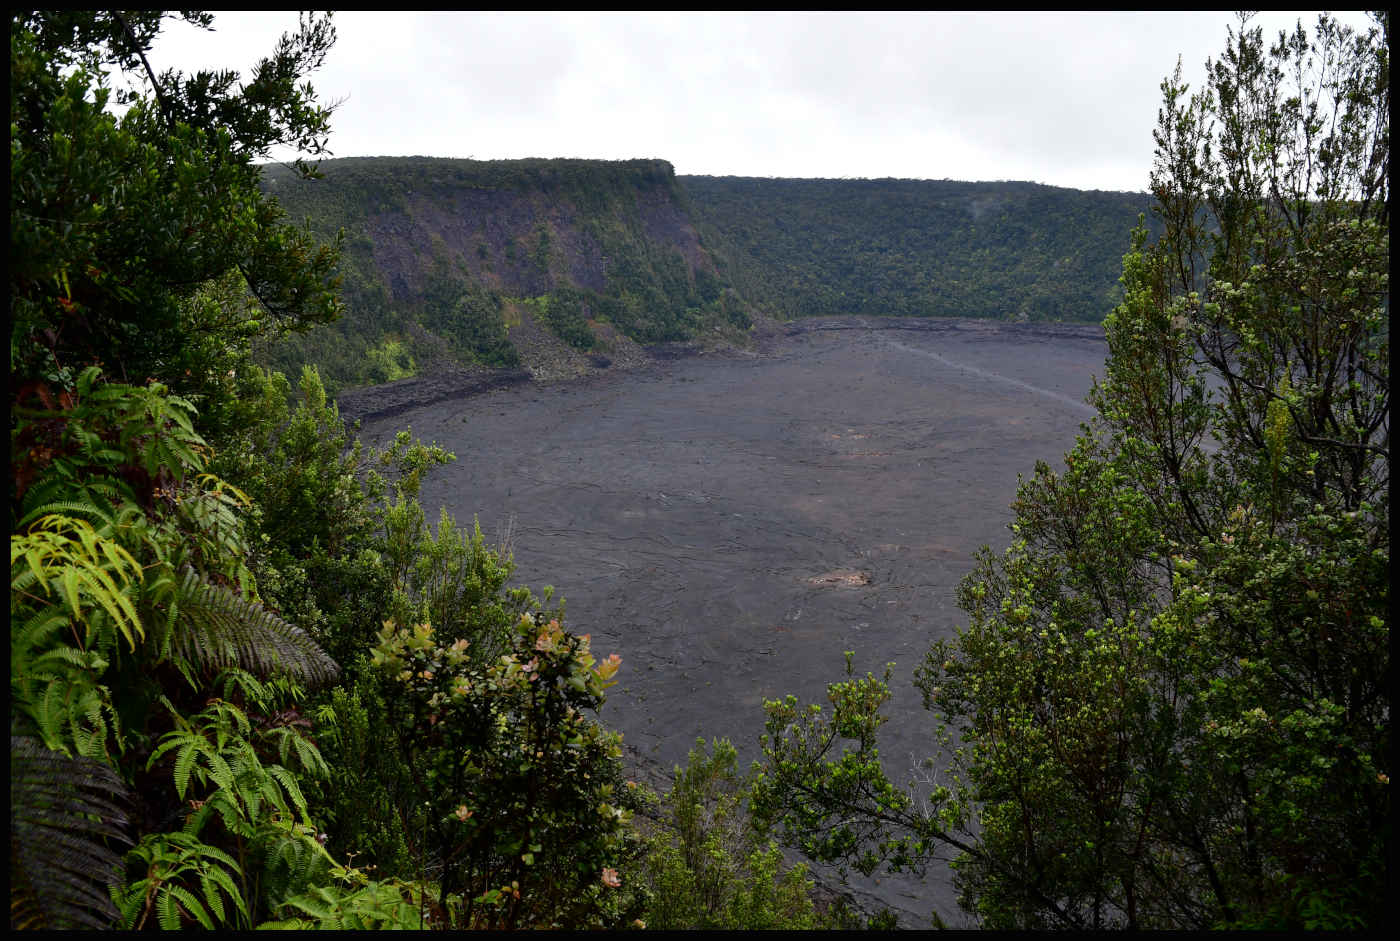 Kilauea Iki Crater